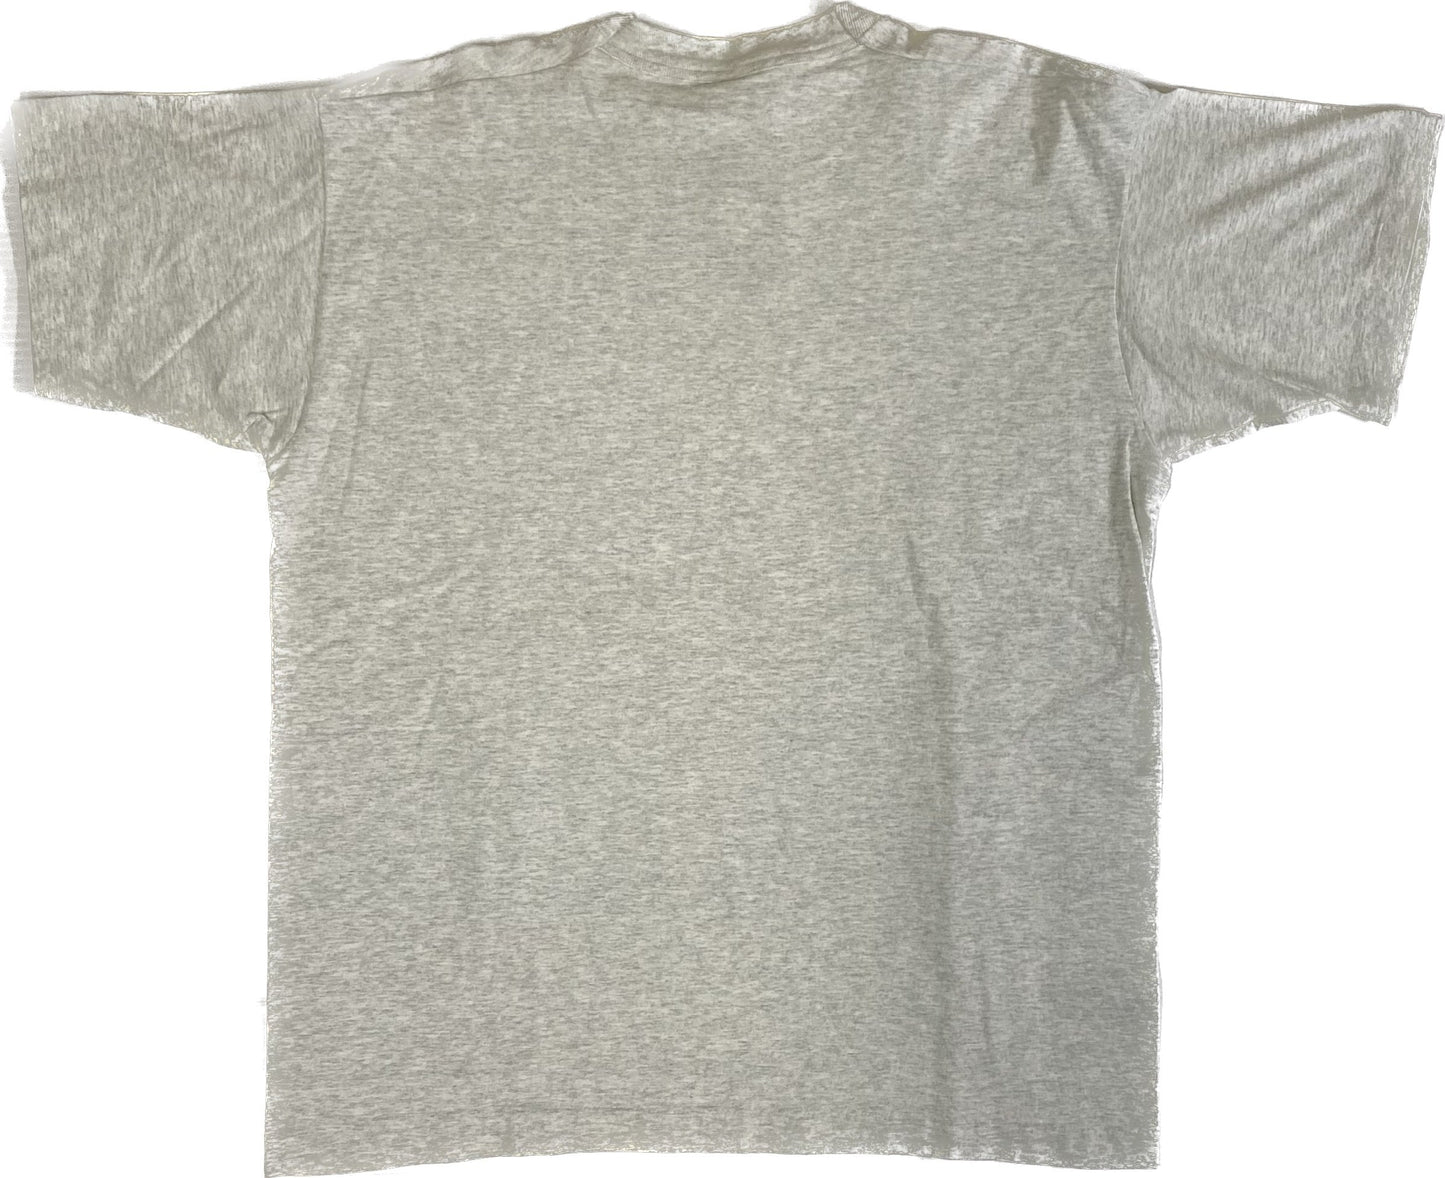 90’s Chicago Blackhawks T-shirt Sz XL (A240)